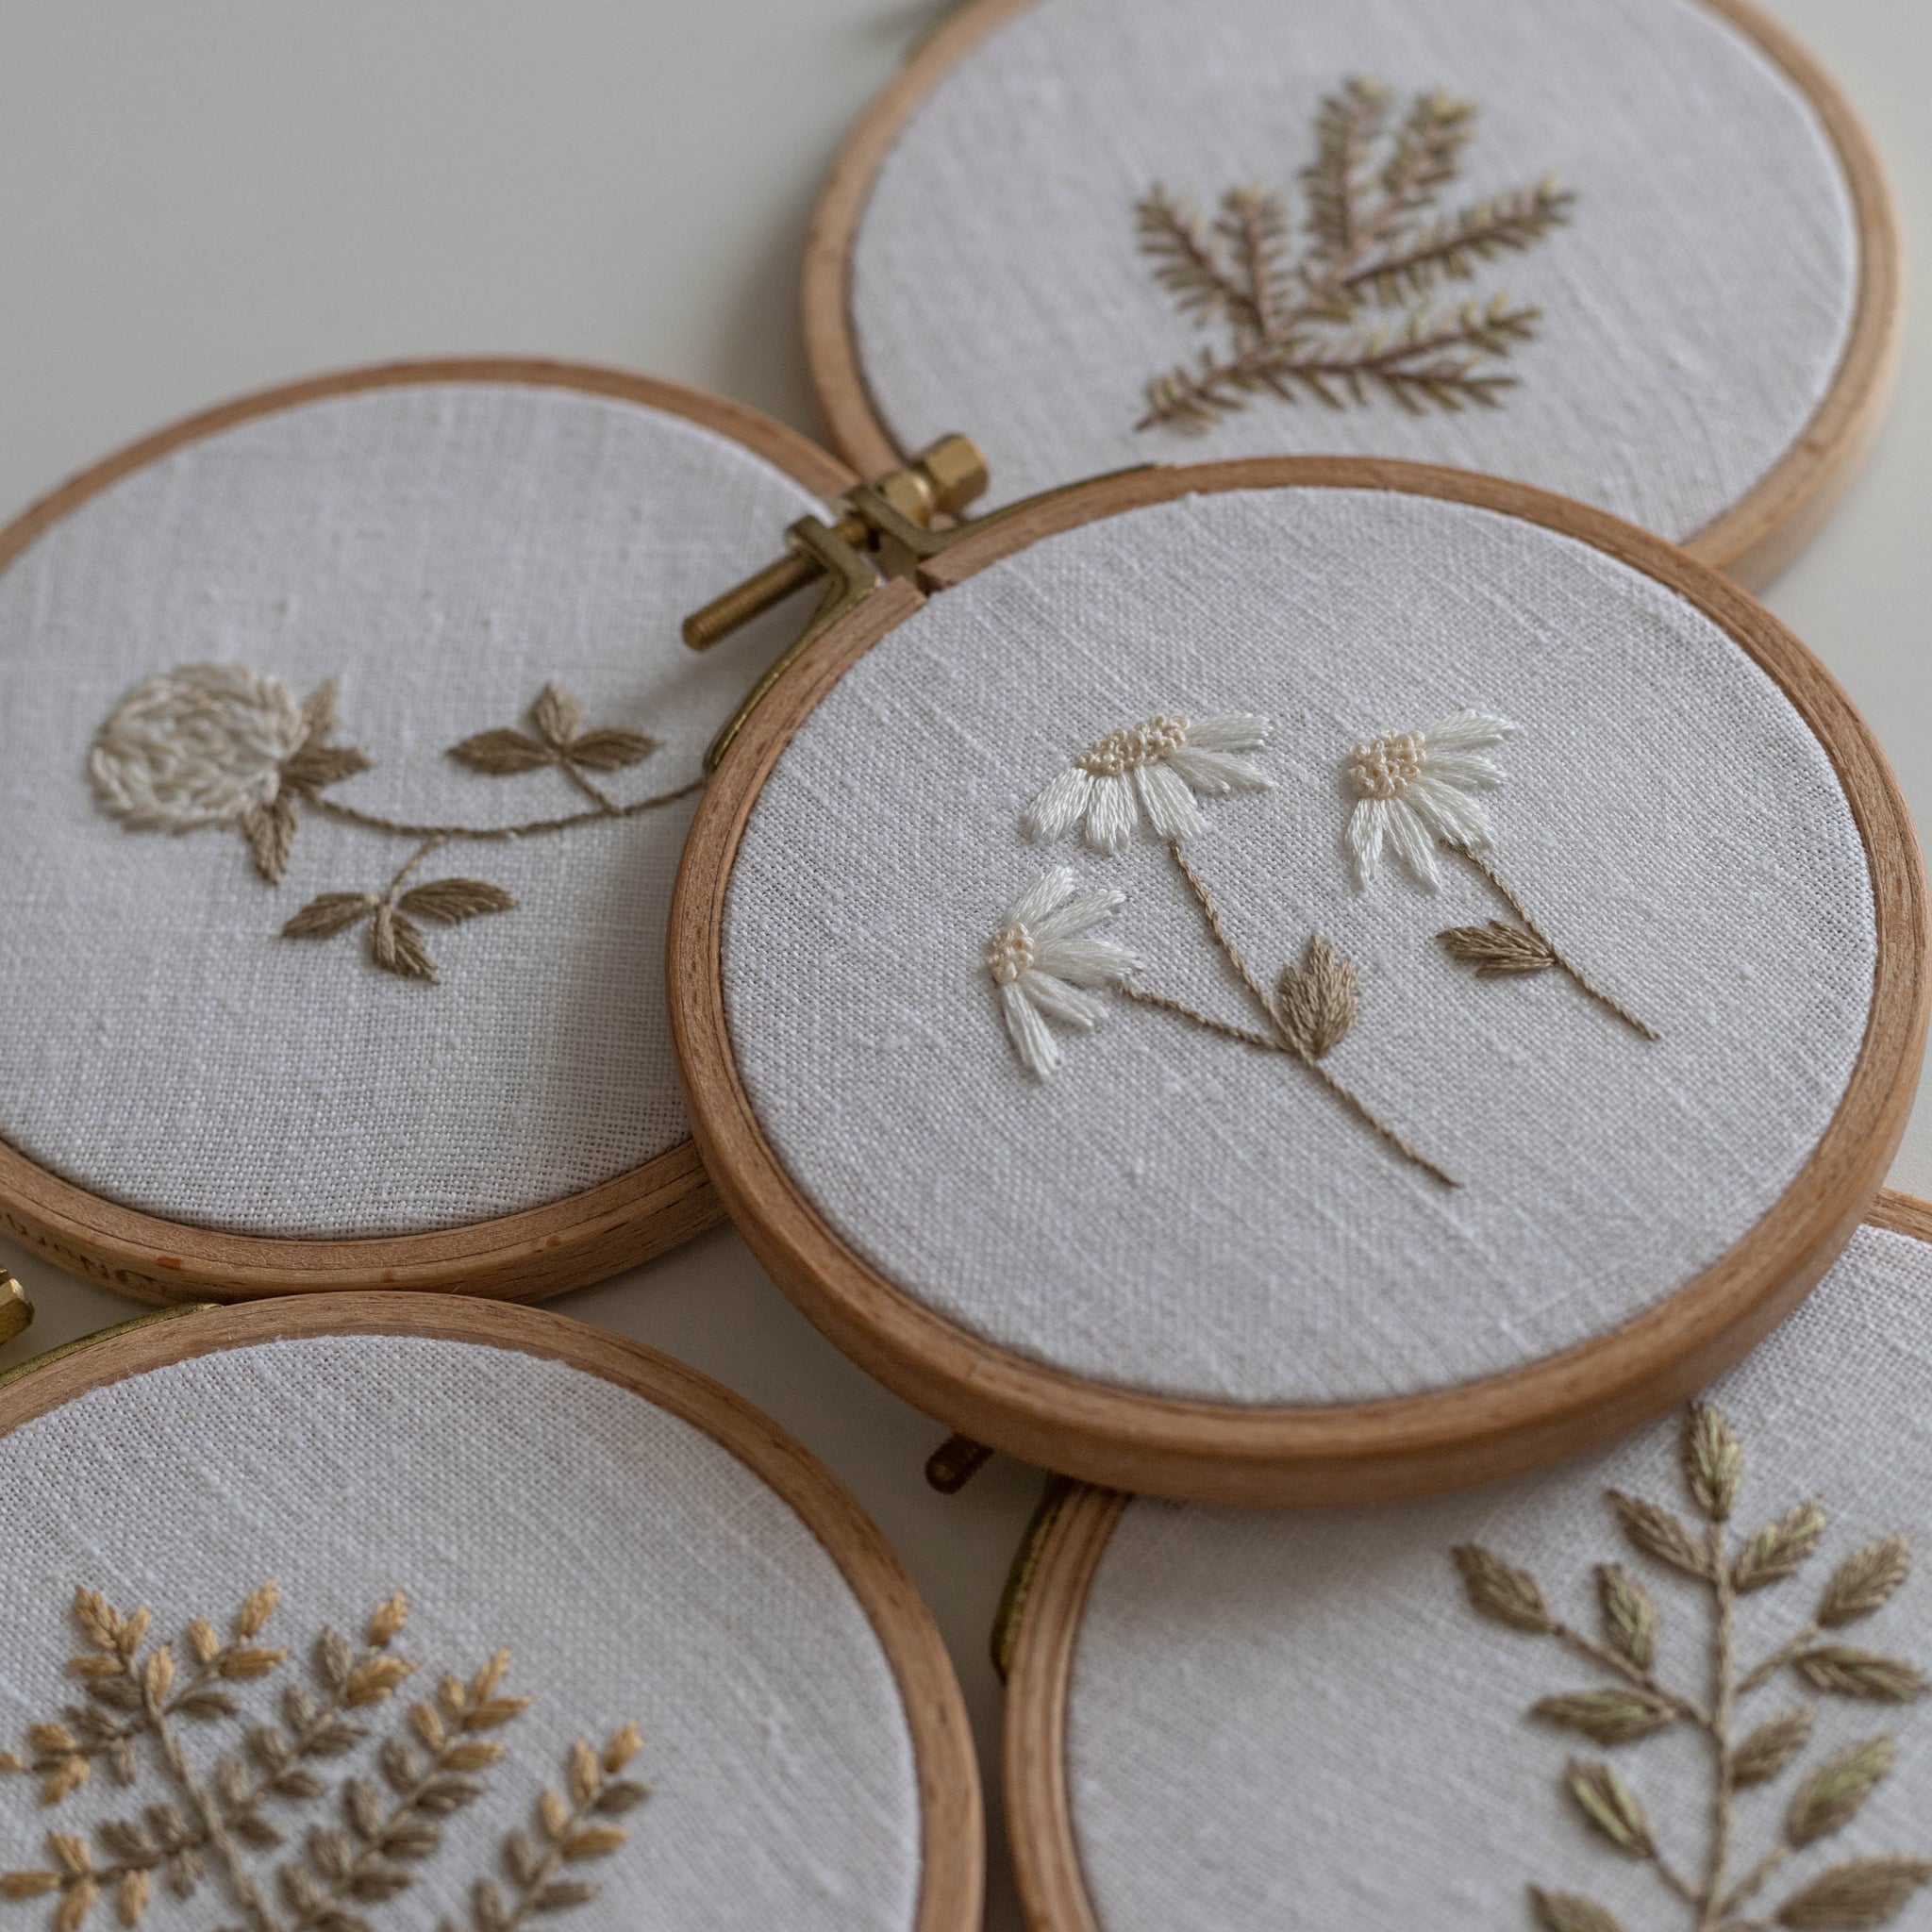 Botanical embroidery patterns, set of 5 – whynotstitching